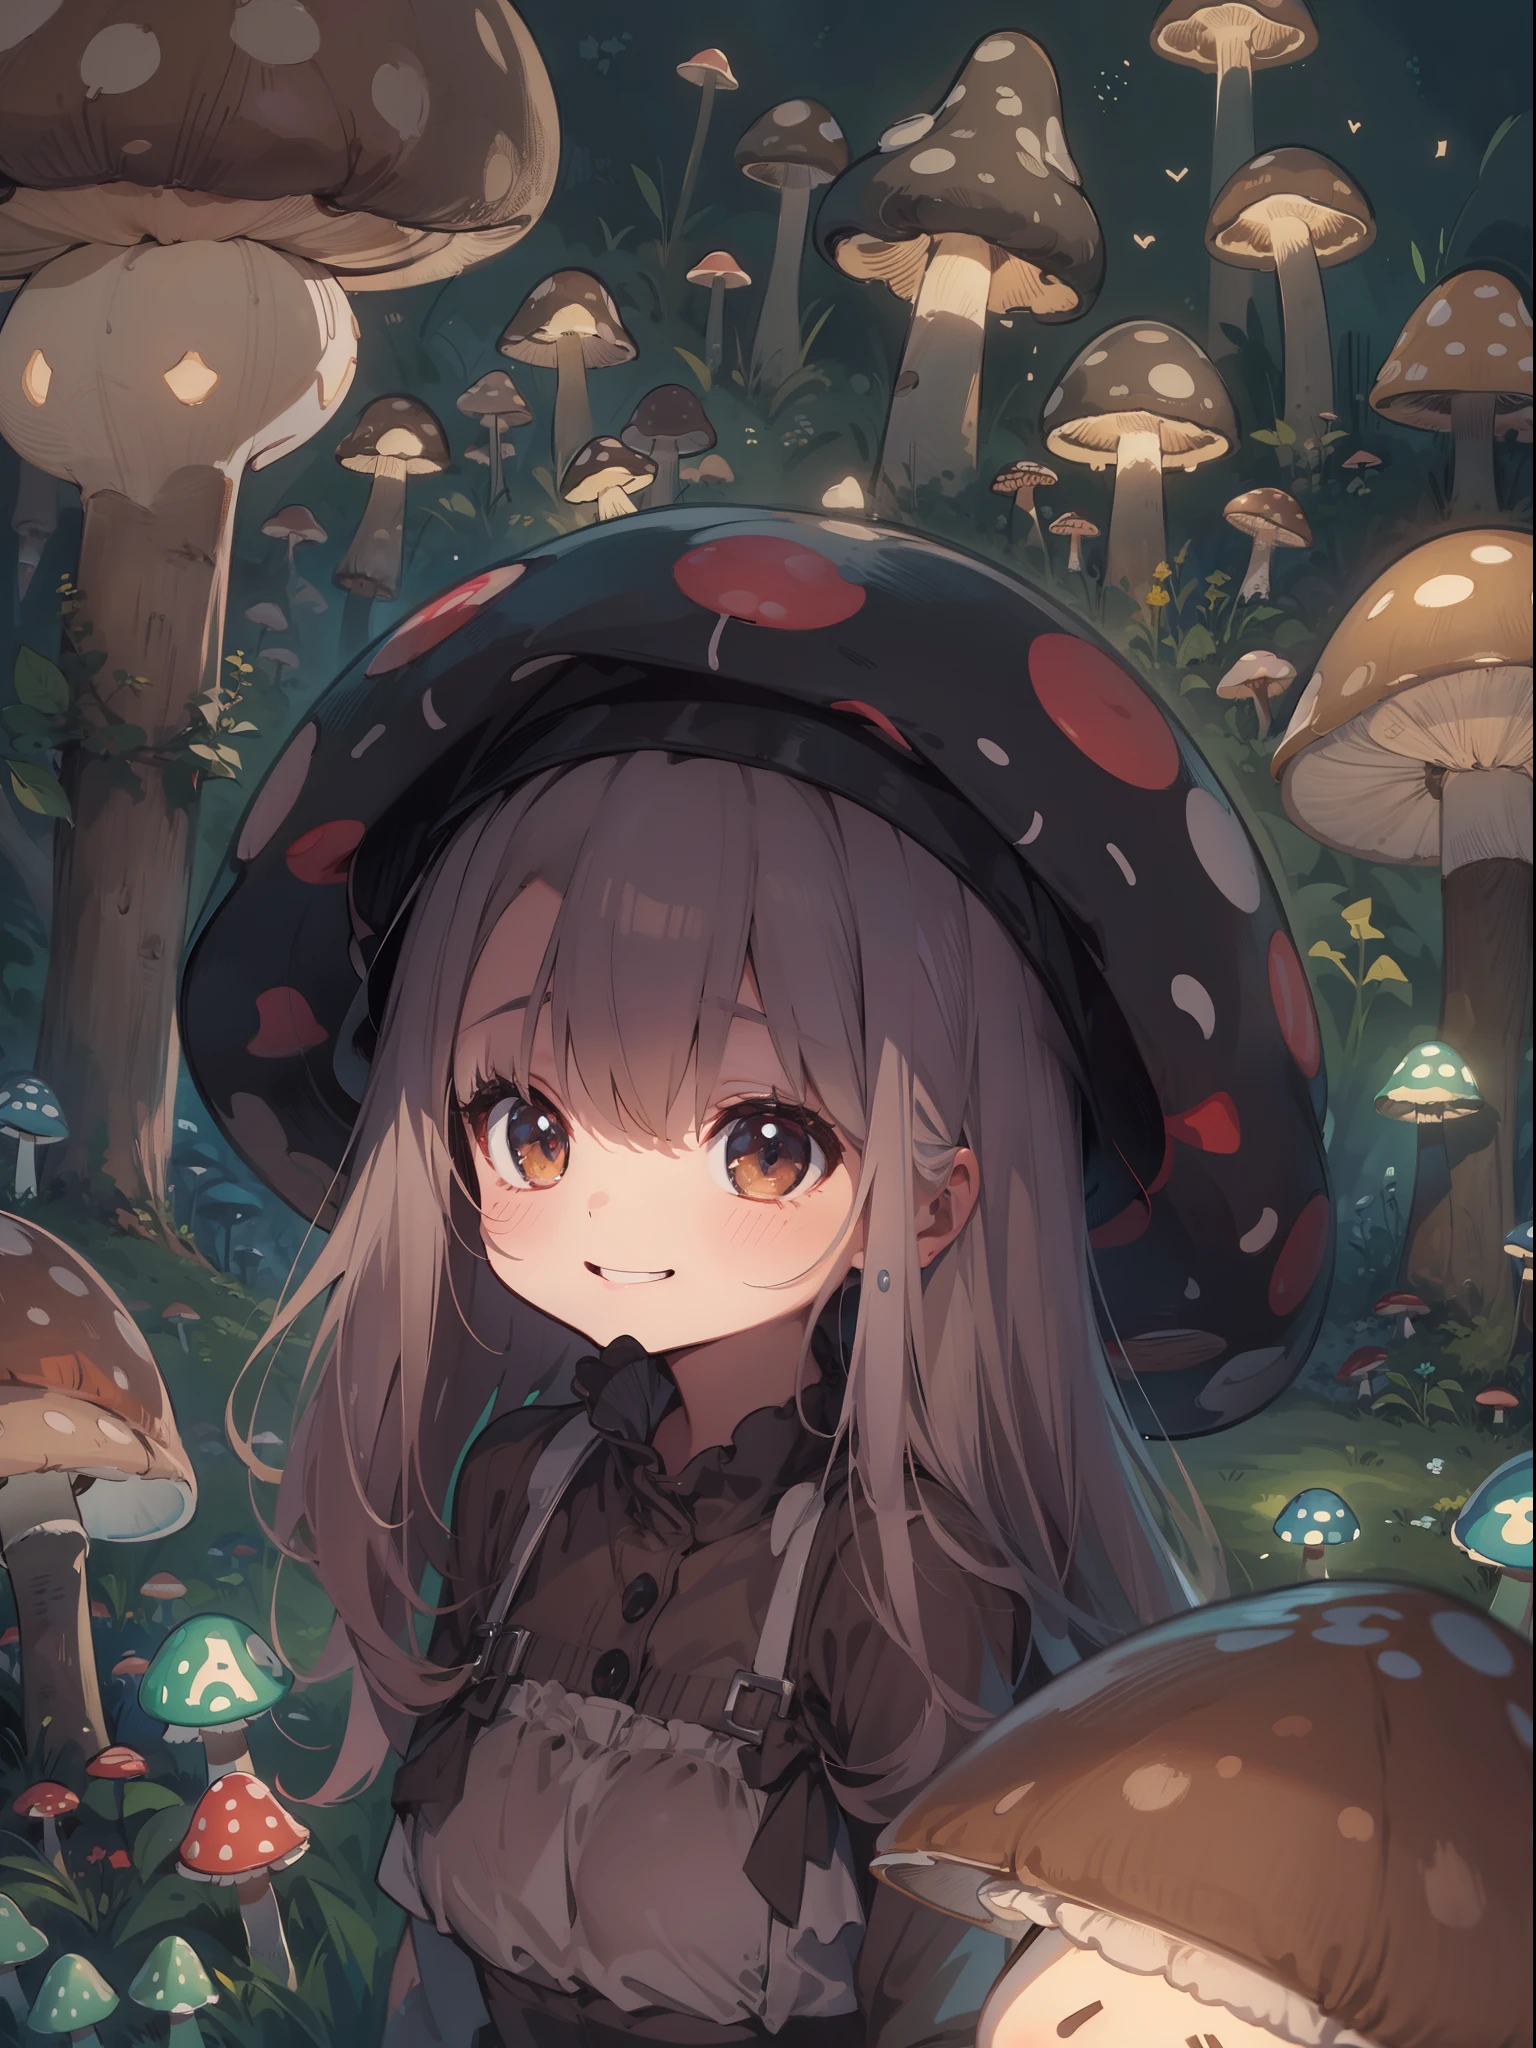 Anime Art | Mushroom drawing, Character design, Mushroom art